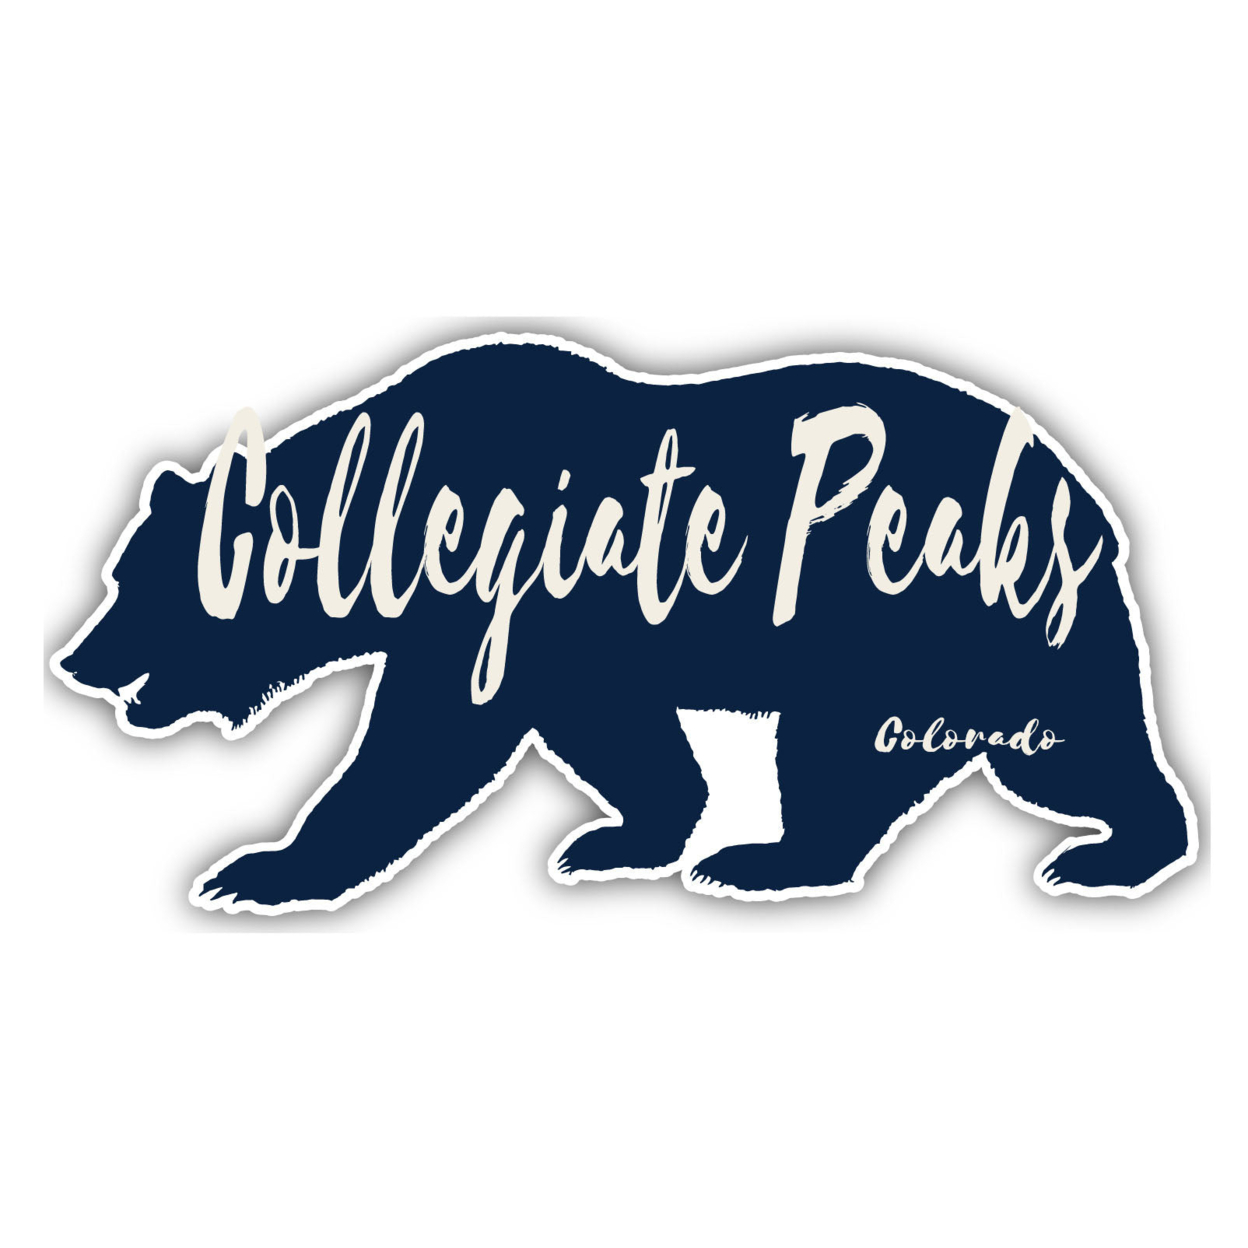 Collegiate Peaks Colorado Souvenir Decorative Stickers (Choose Theme And Size) - Single Unit, 6-Inch, Tent